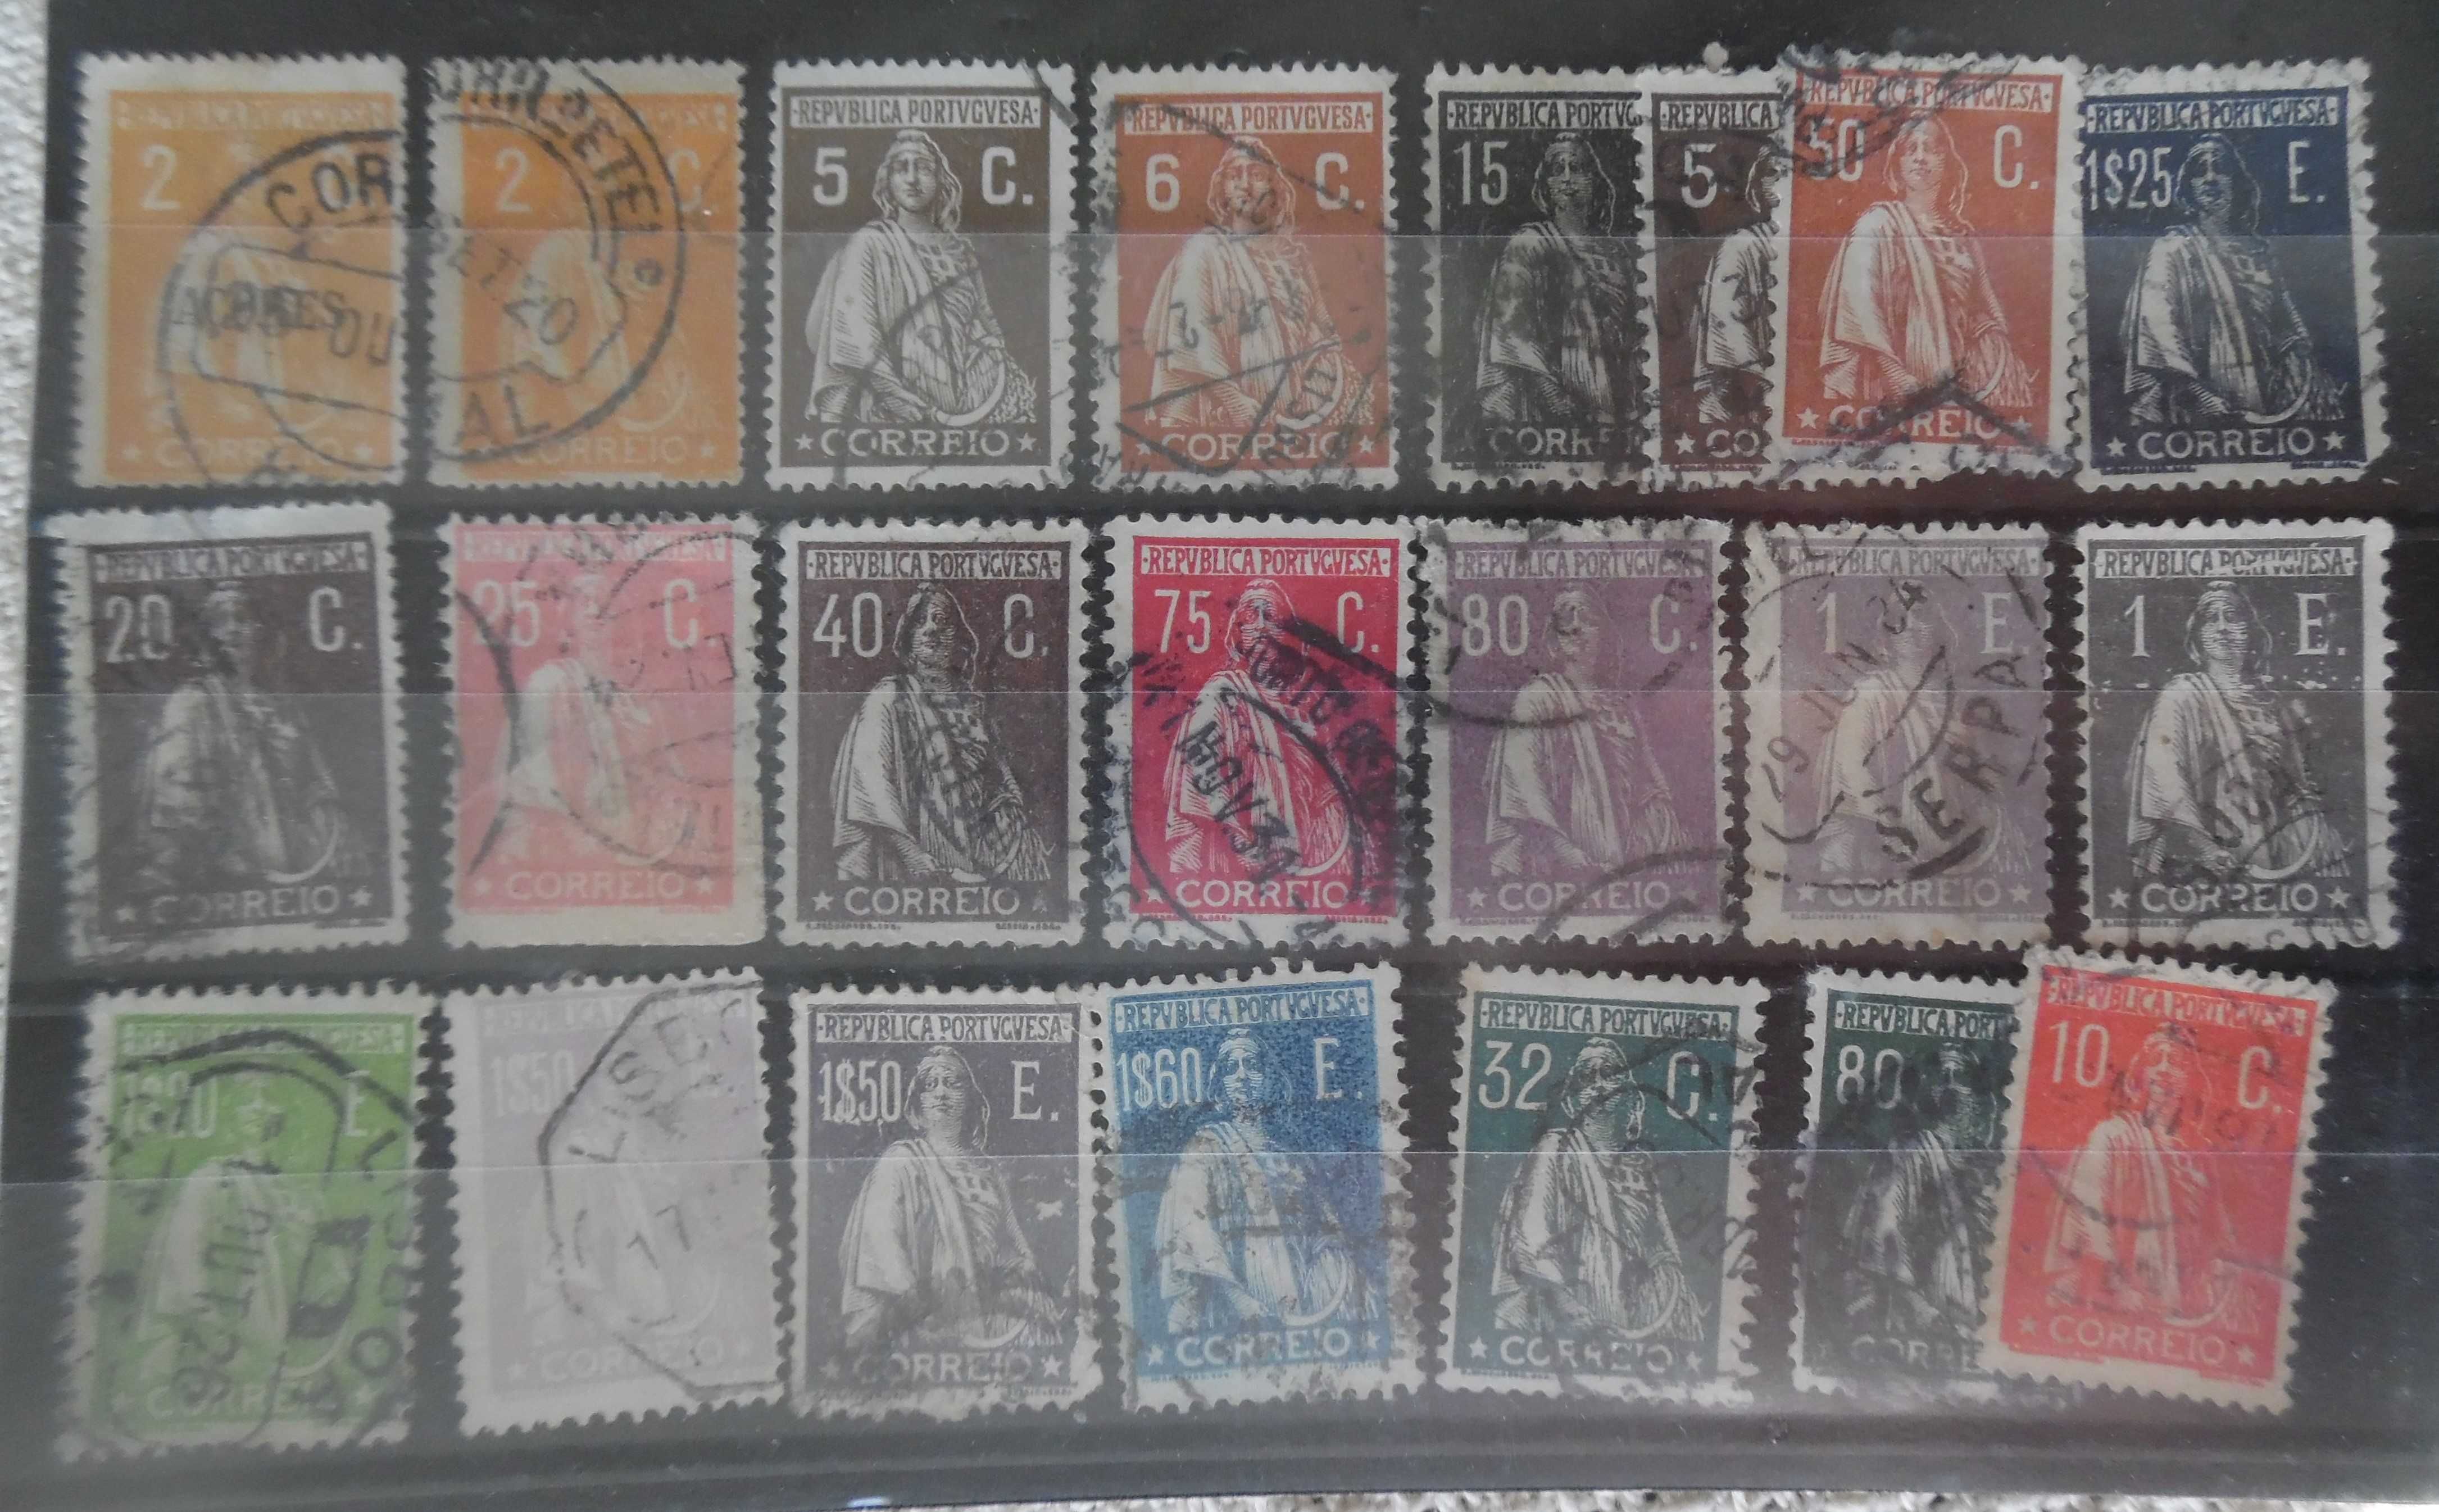 Selos Portugal 1912/1930-Lote Ceres c/ bons valores filatélicos